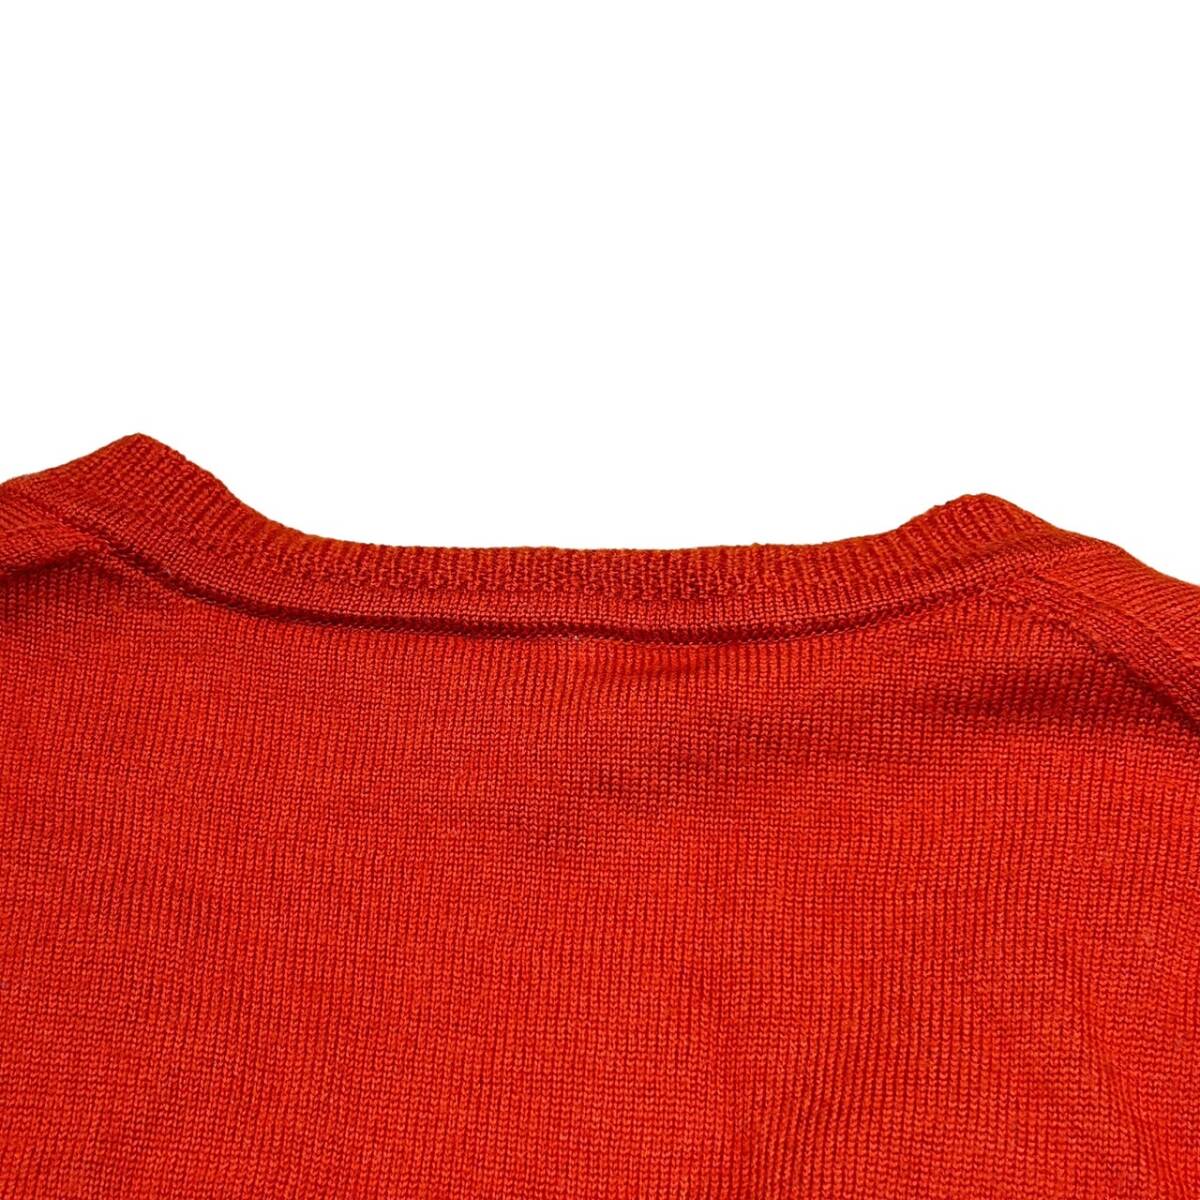 Vivienne Westwood Vivienne Westwood sweater orange knitted 46